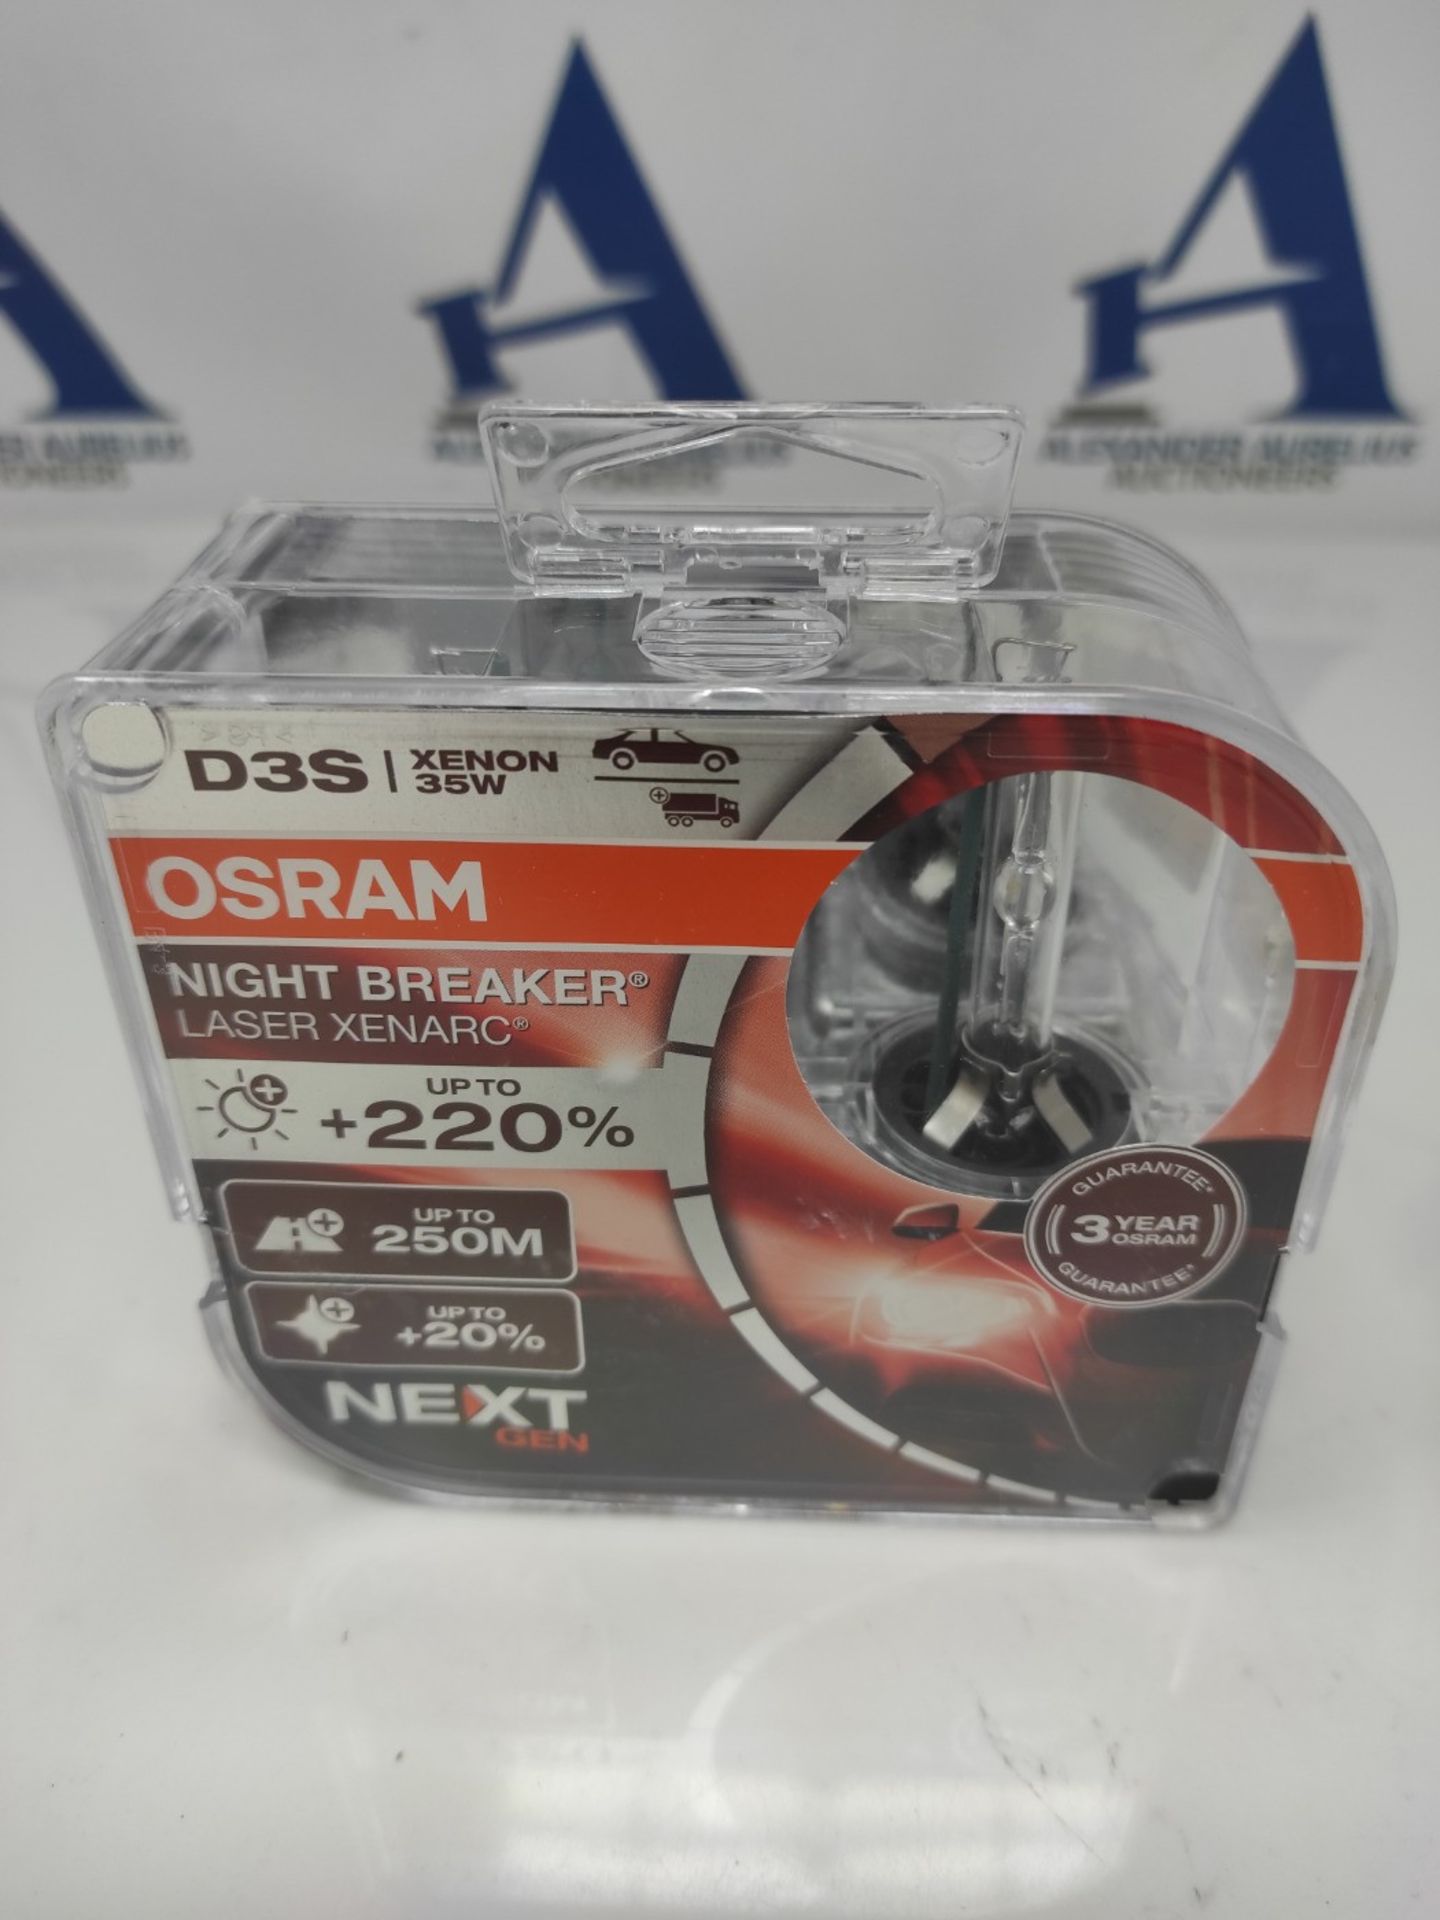 RRP £169.00 OSRAM XENARC NIGHT BREAKER LASER D3S Next Generation, superior brightness +220%, HID x - Image 2 of 2